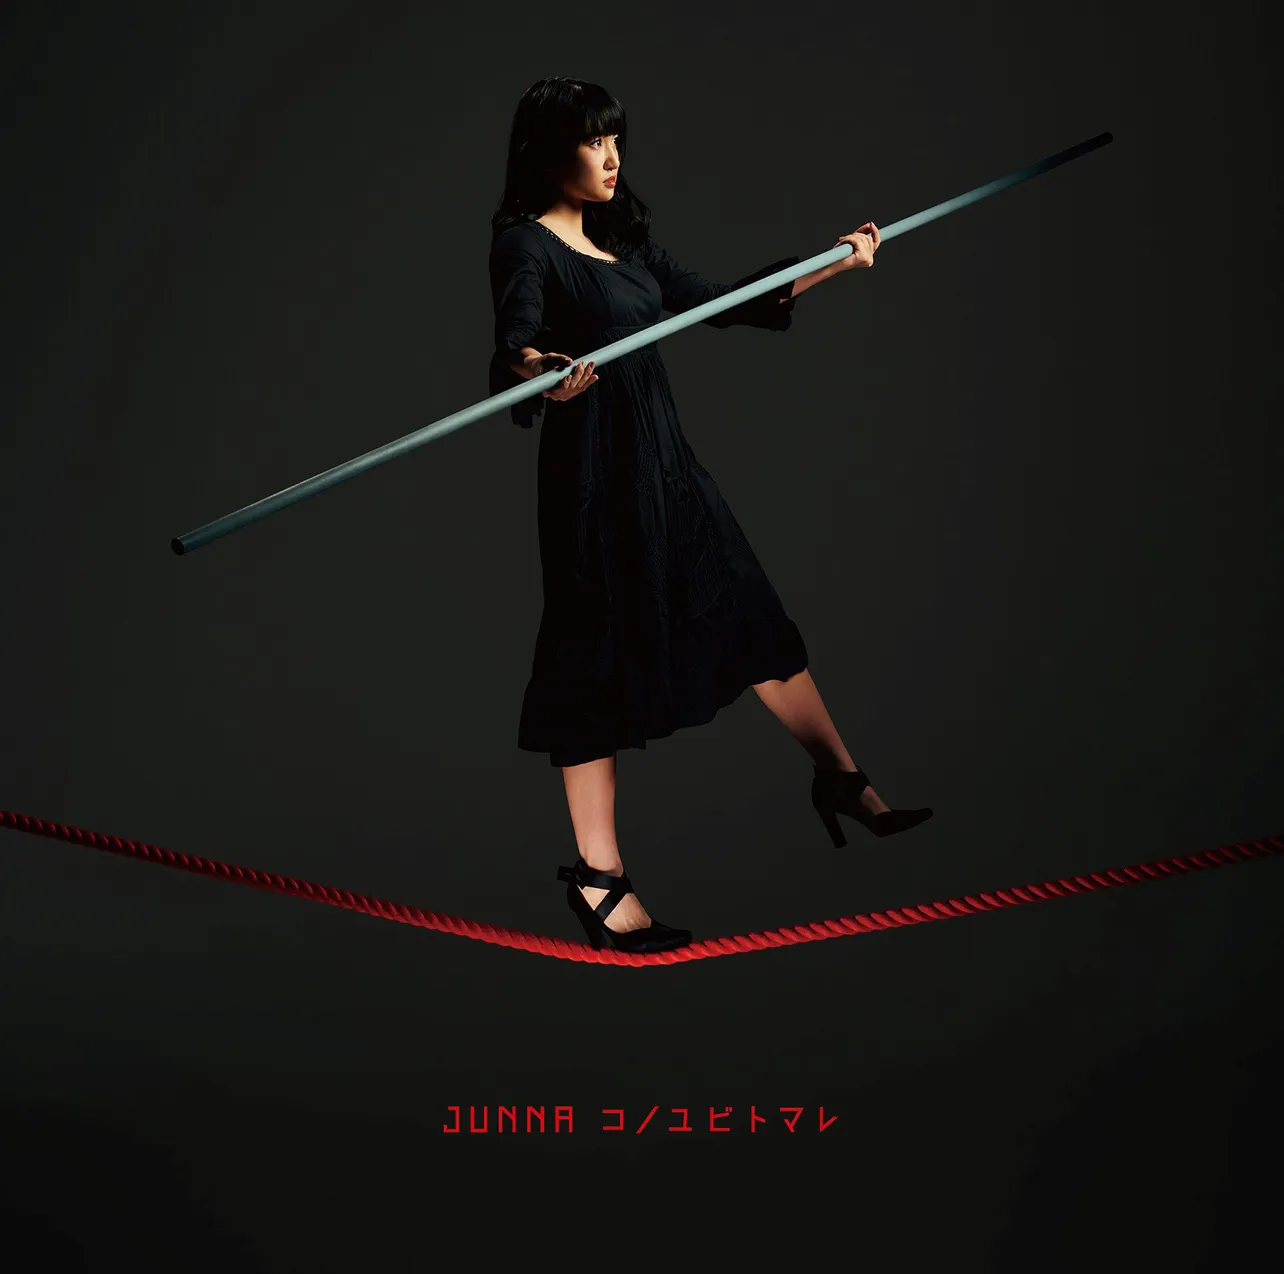 JUNNAの3rdシングル「コノユビトマレ」ジャケット写真